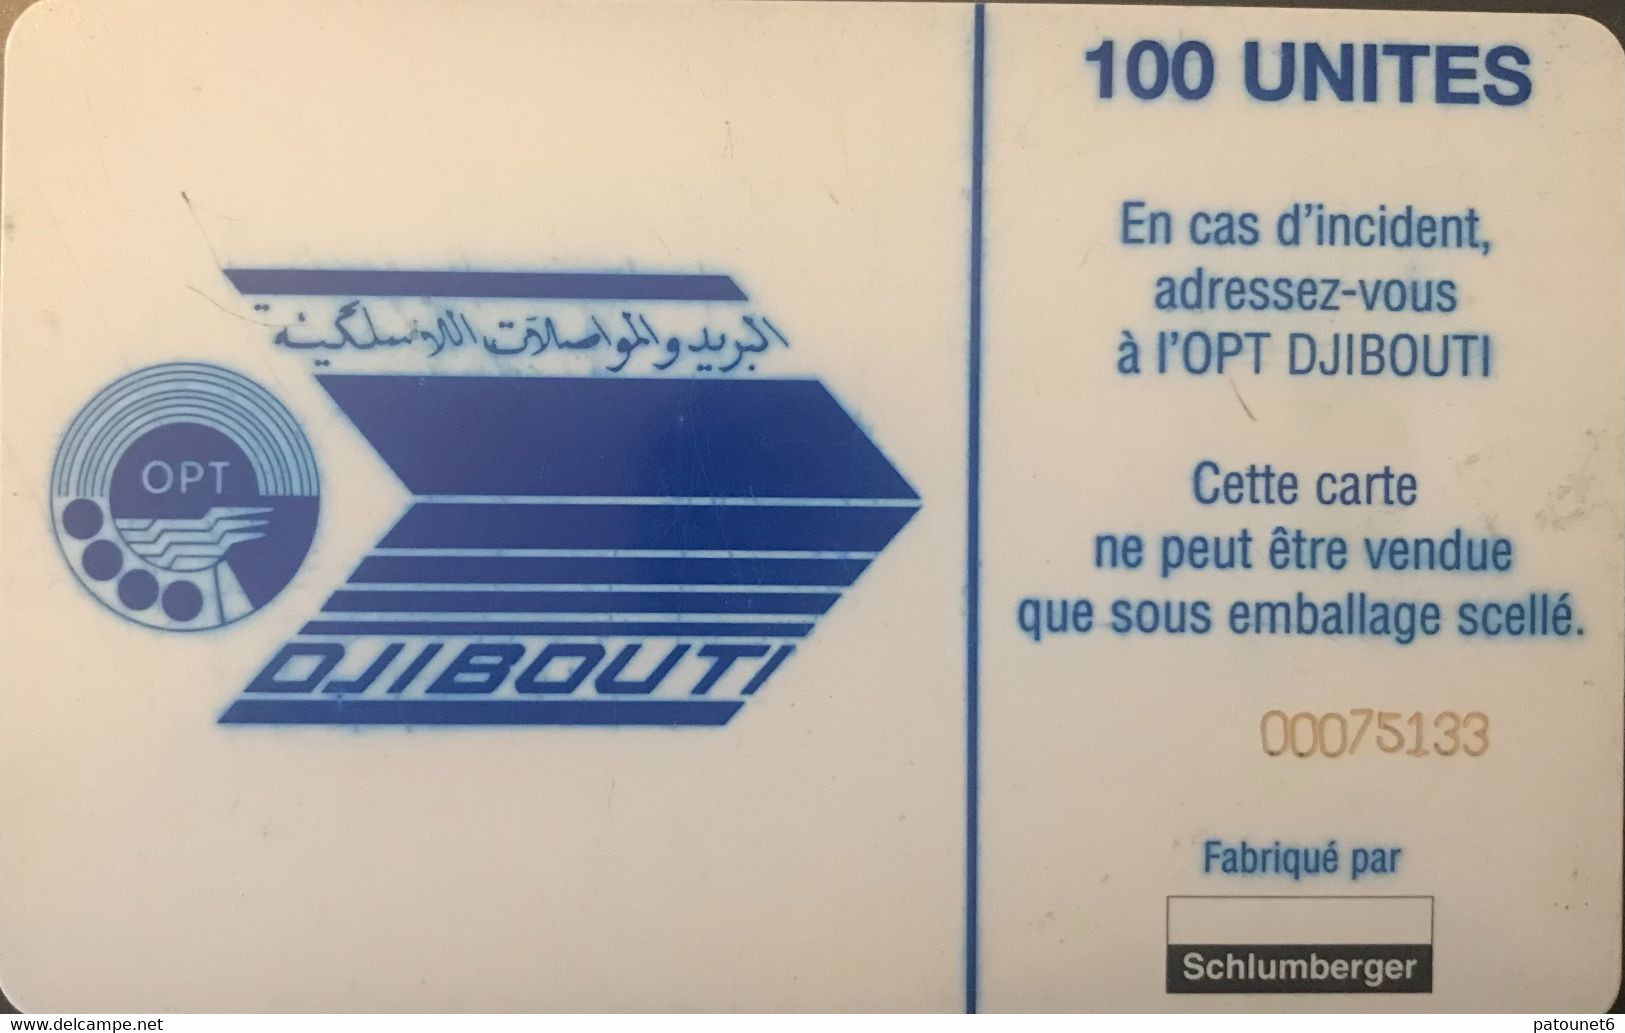 DJIBOUTI  -  Phonecard  -  OPT DJIBOUTI  -  SC 7  - Plage Rochers  - 100 Unités  - Différent Back (Impression Grasse) - Djibouti